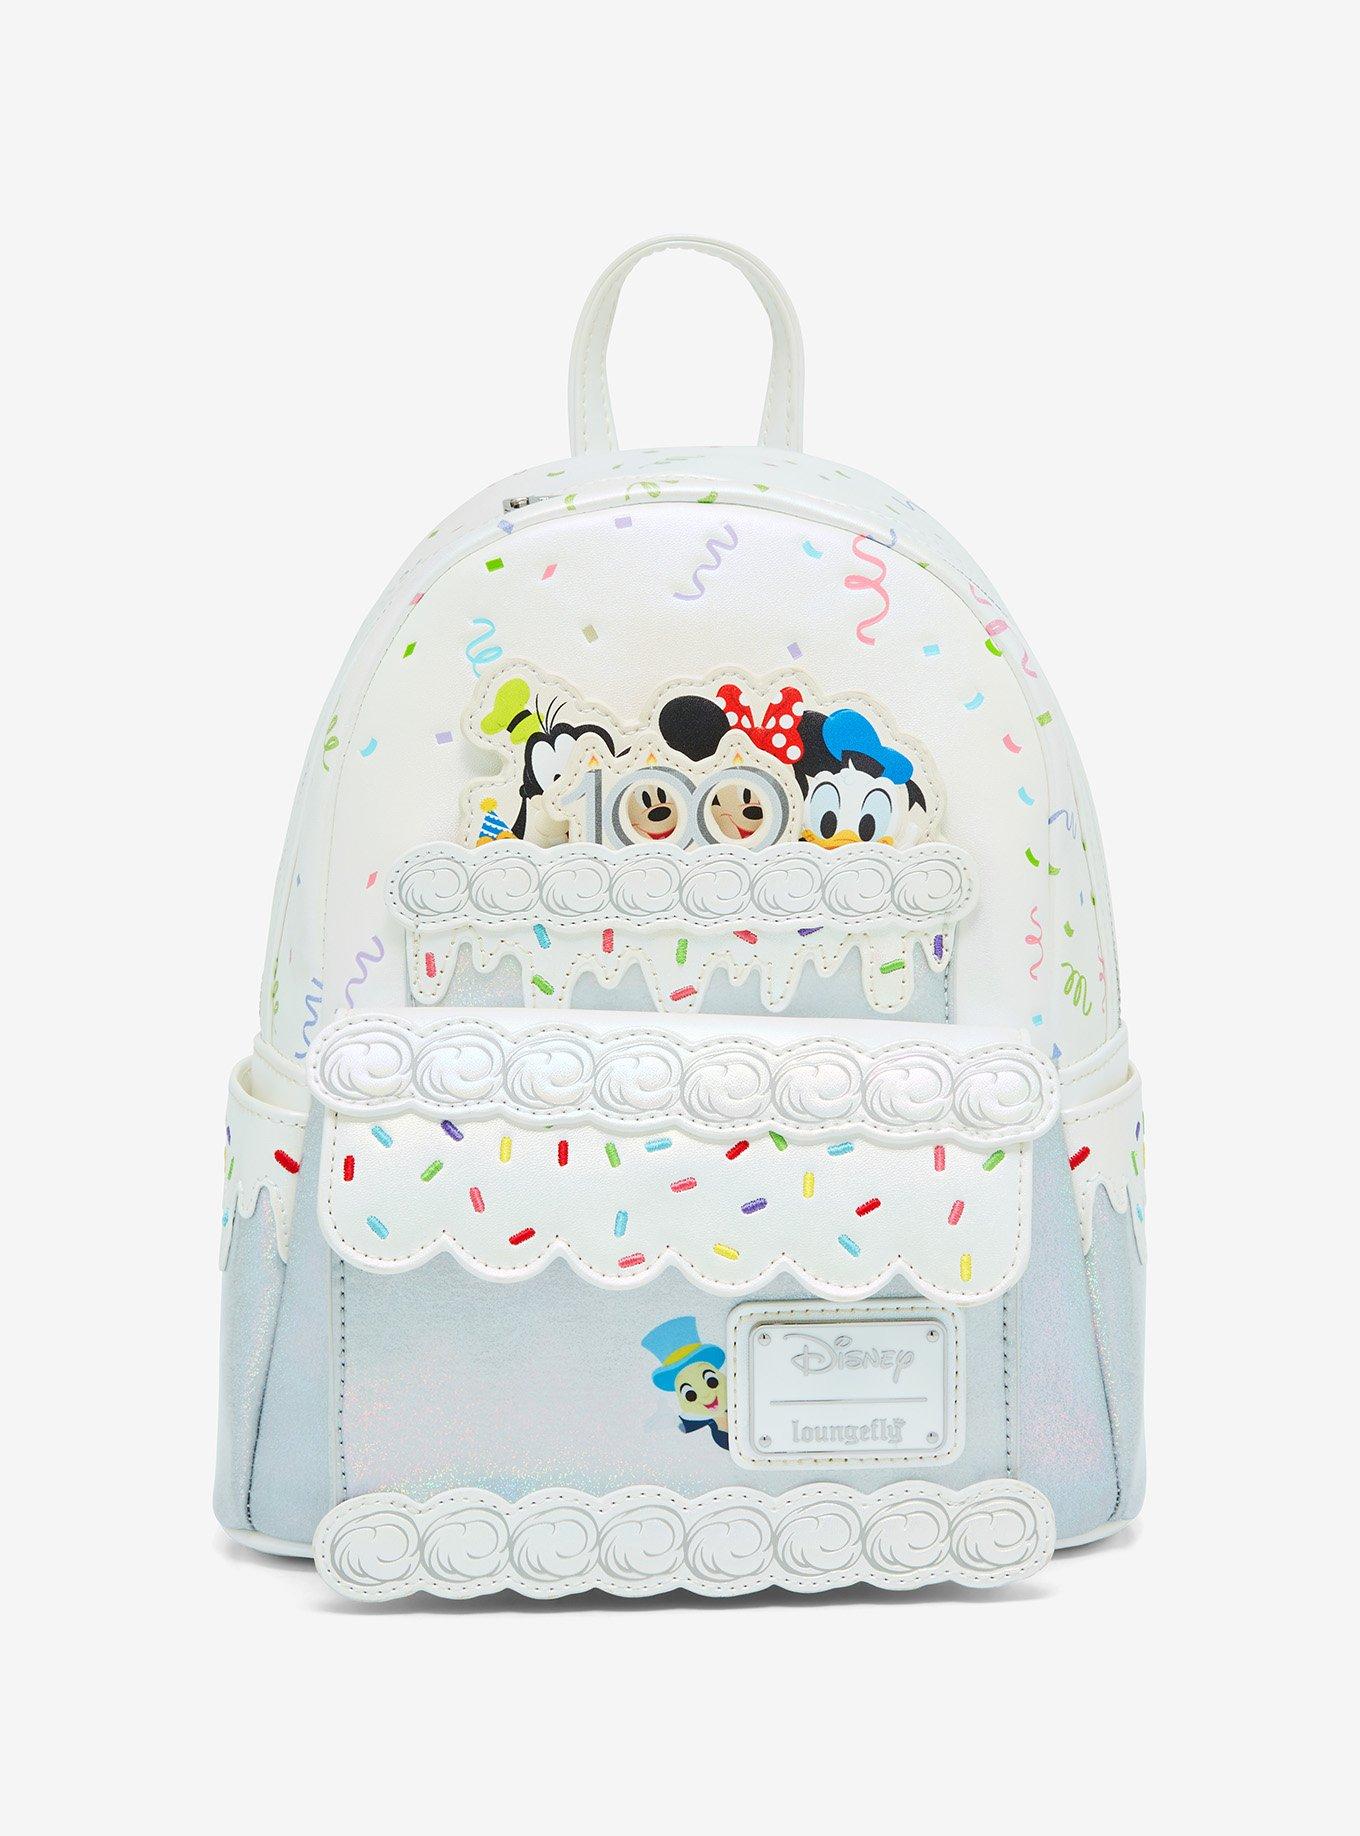 Disney Loungefly Mini Backpack - Disney Princess Books Classics